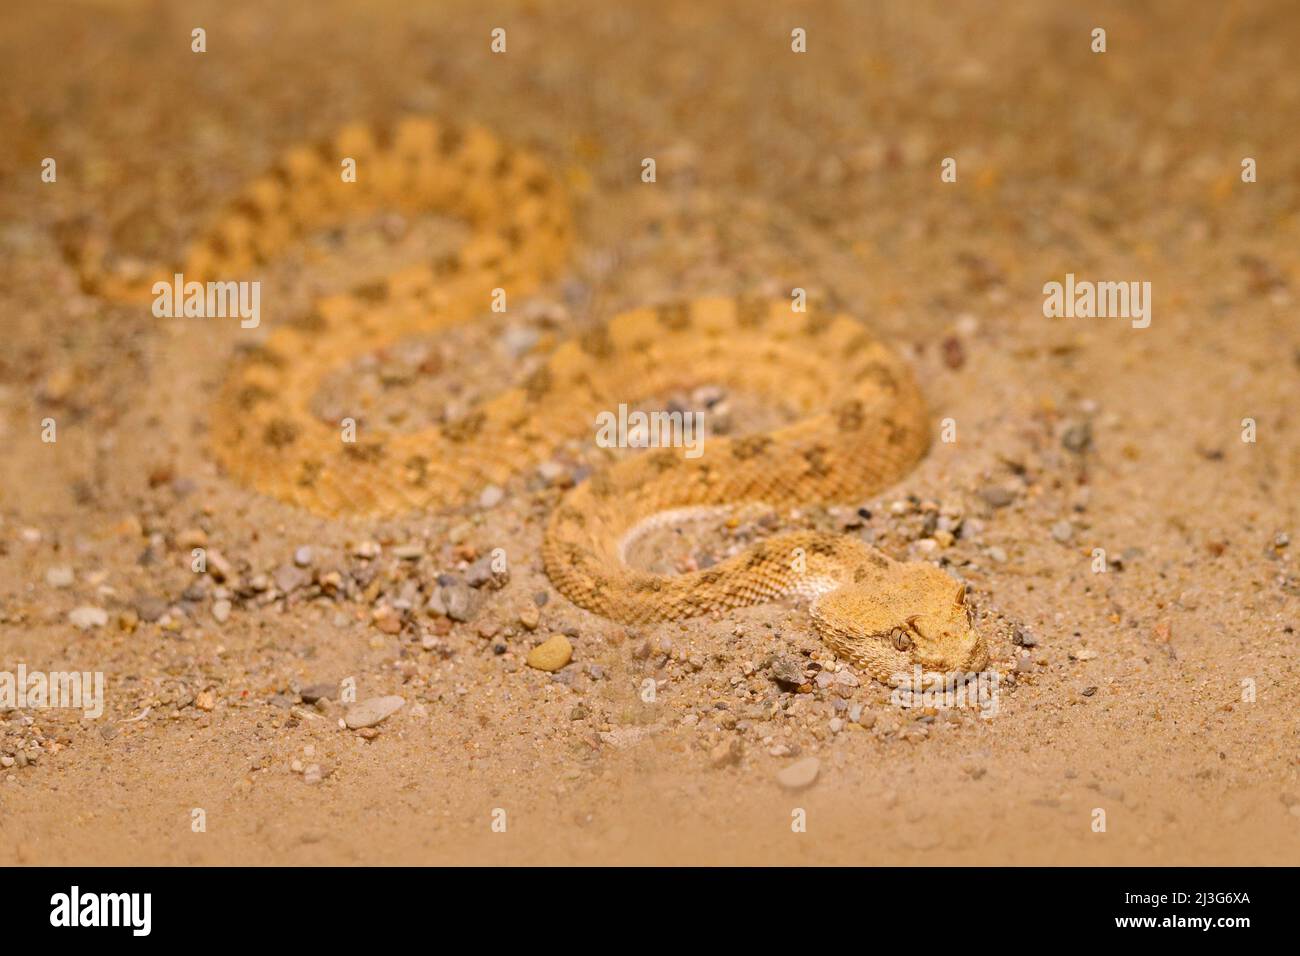 Saharan horned desert viper, Cerastes cerastes, sand, Northern Africa. Supraorbital 'horns' on the head. Dangerous animal hidden in the yellow sand, S Stock Photo